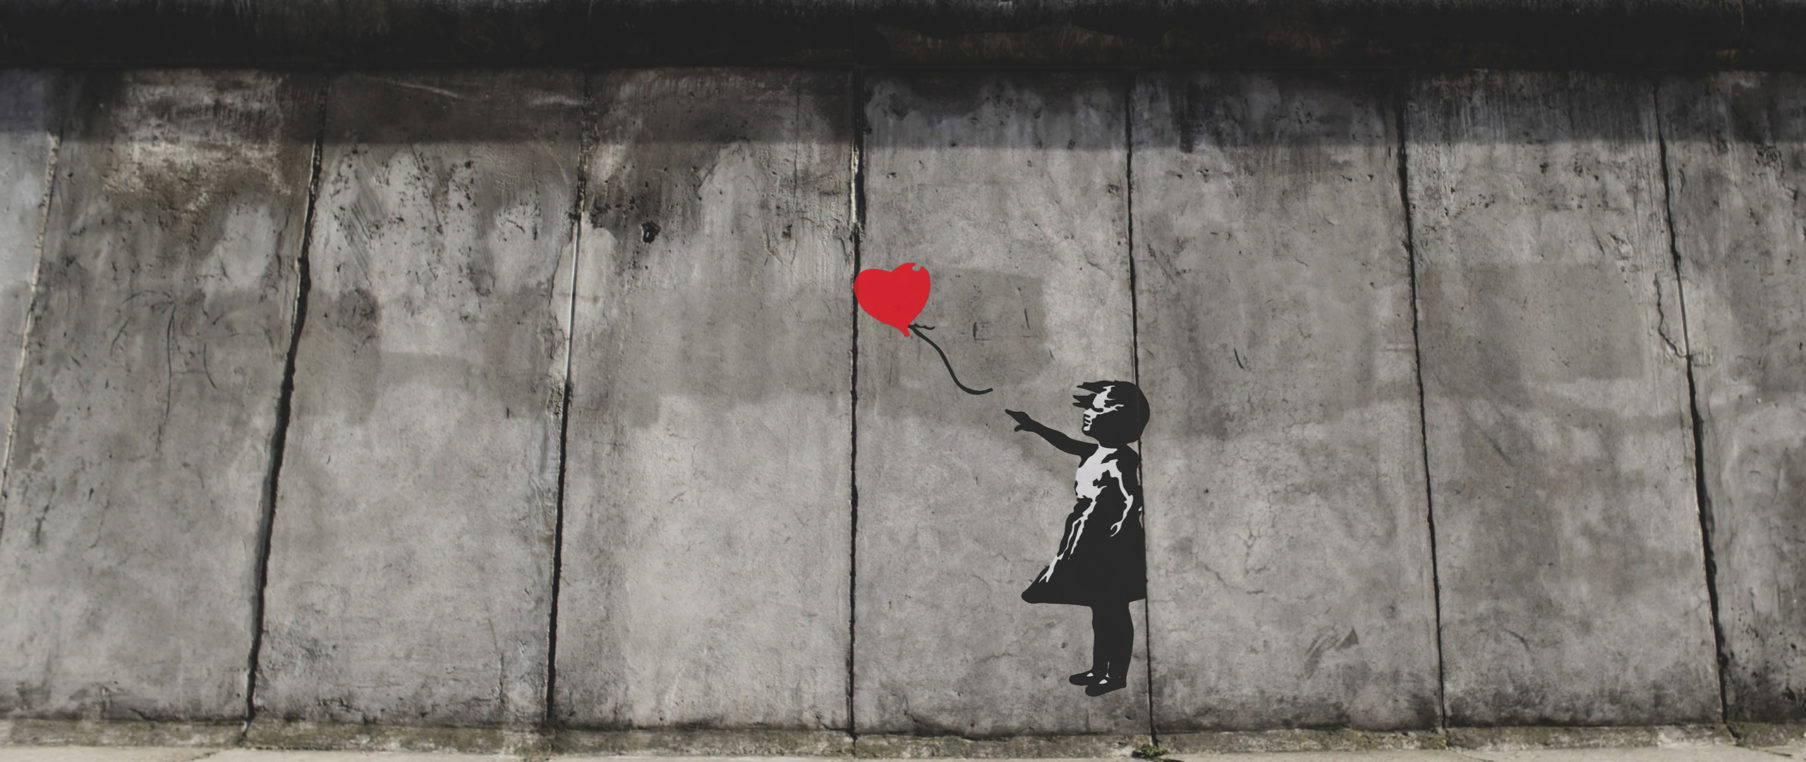 Banksy Balloon Girl 1806x762 Wallpaper Teahub Io